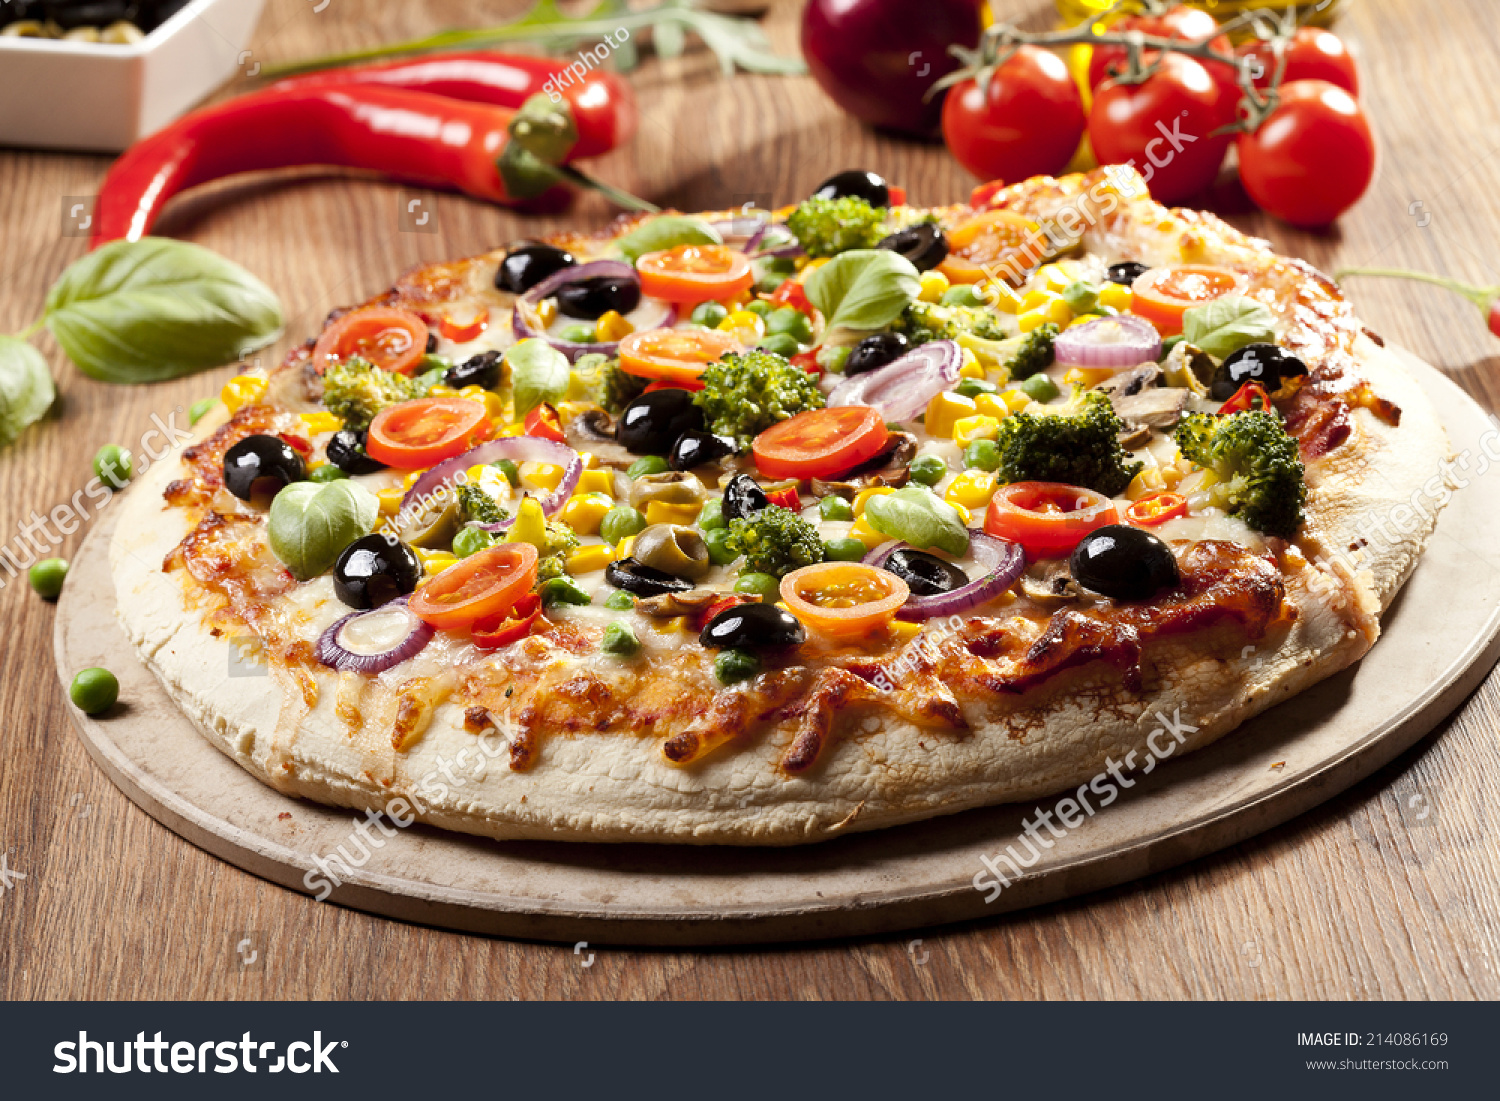 Pizza Vegetarian On Plate Stock Photo 214086169 : Shutterstock